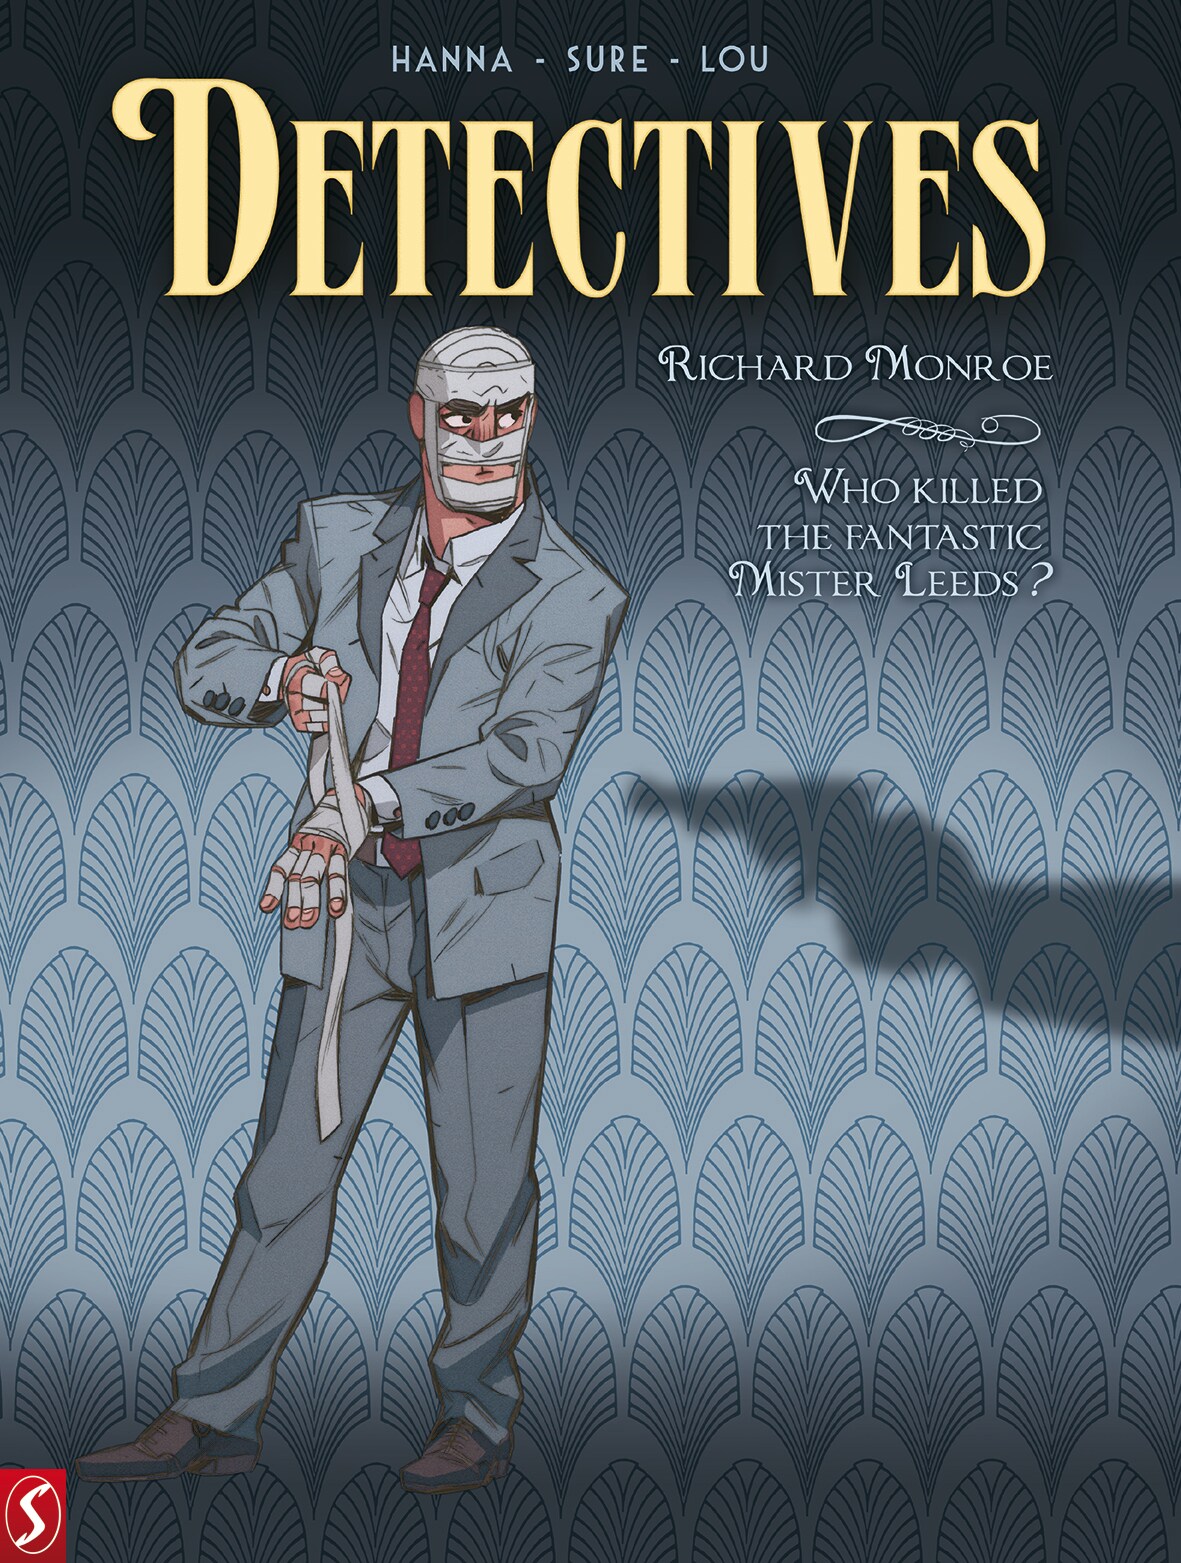 Detectives 2: Richard Monroe - Who Killed the Fantastic Mister Leeds? ★★★★☆